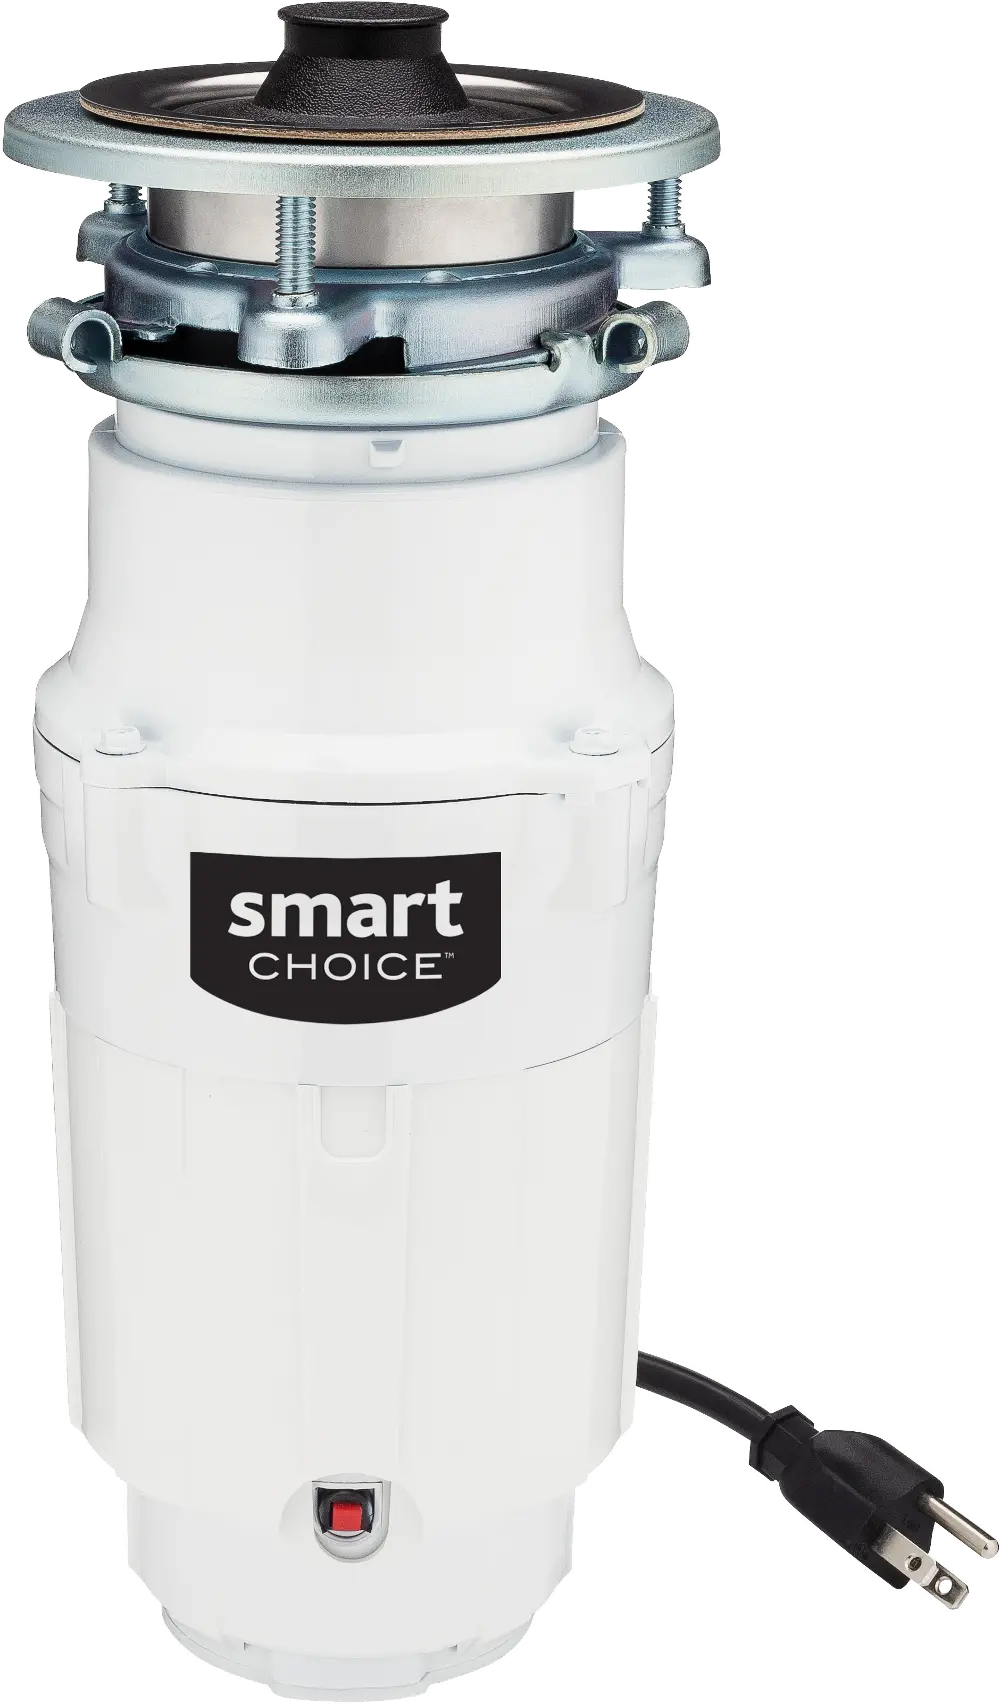 SC05DISPC1 Frigidaire Smart Choice Food Disposal - 1/2 HP, White-1